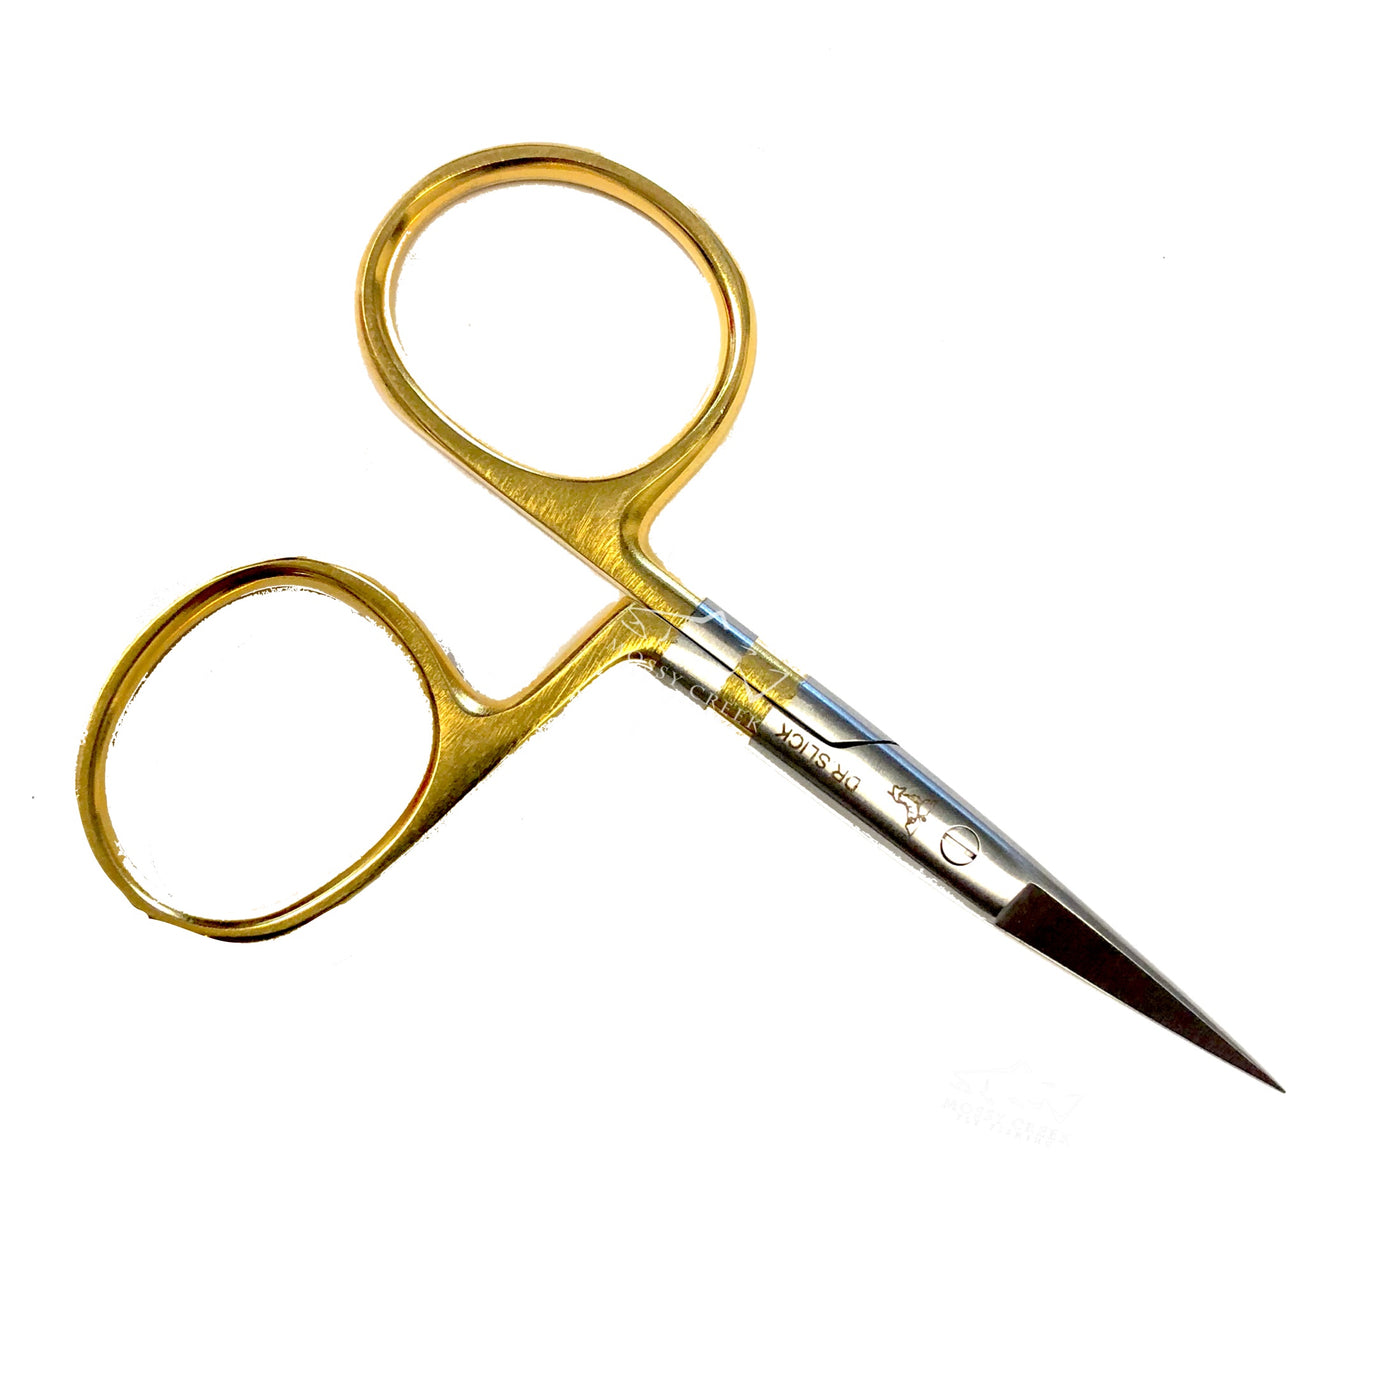 Dr. Slick 4 All Purpose Scissor Curved